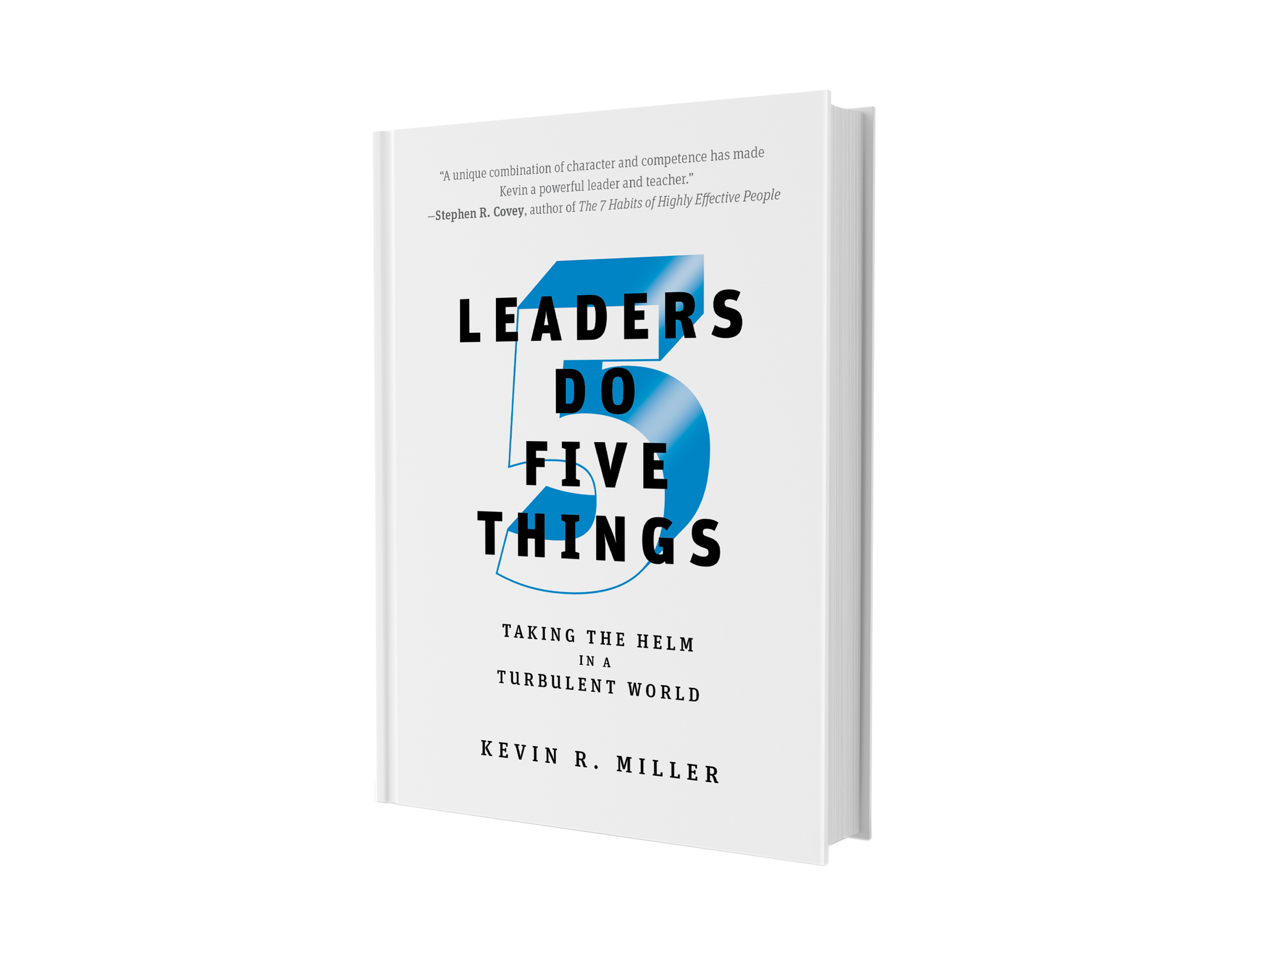 Leaders do five things